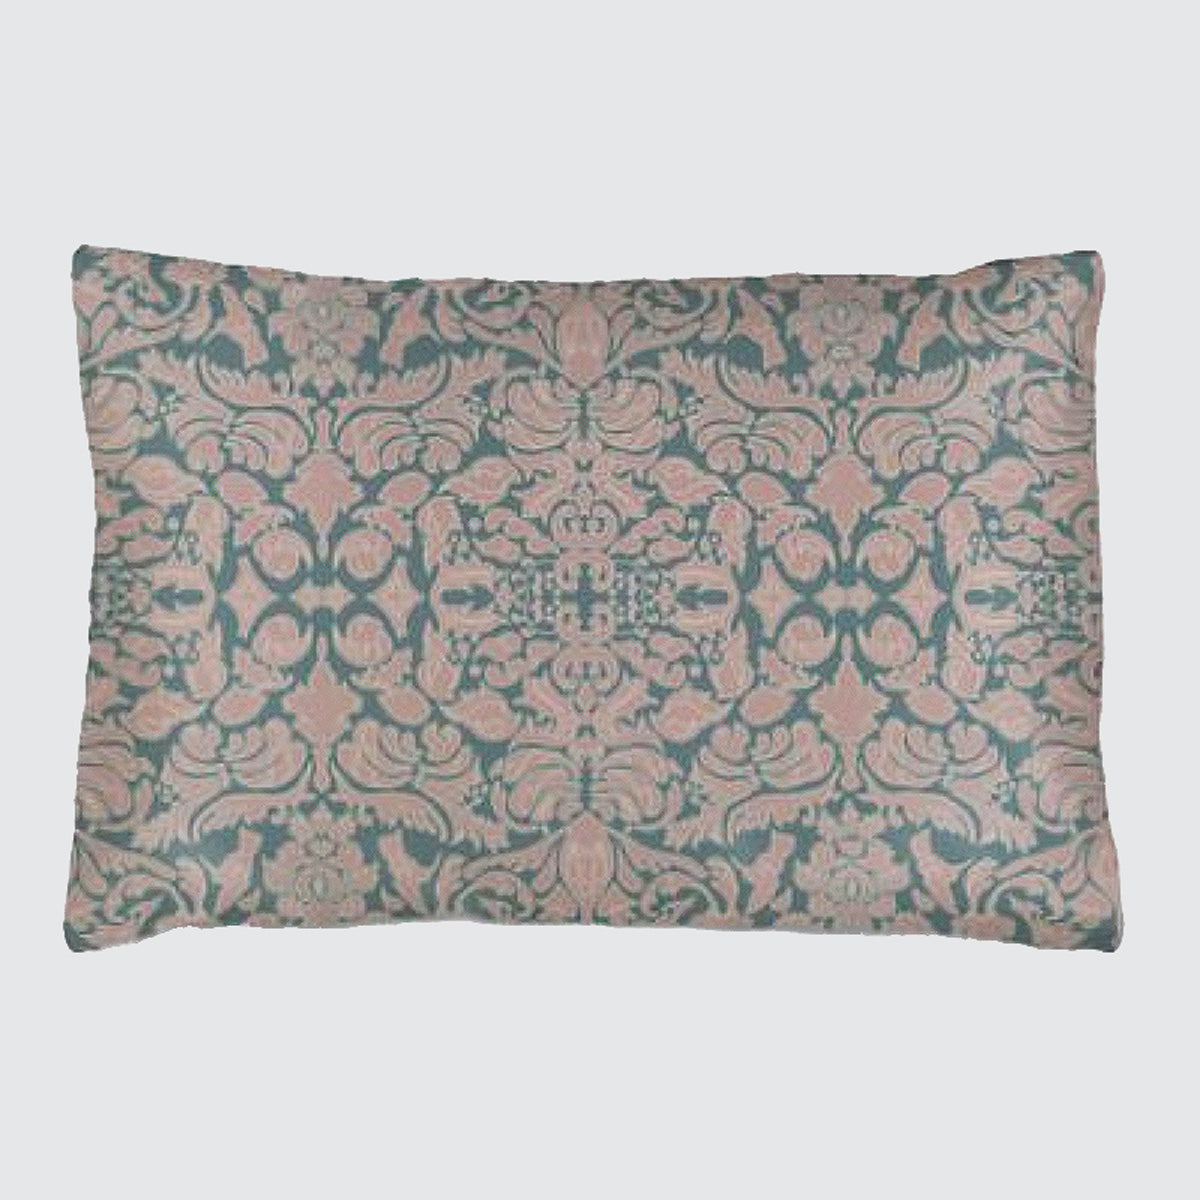 Silk pillowcase with pink and sage green hummingbird damask design